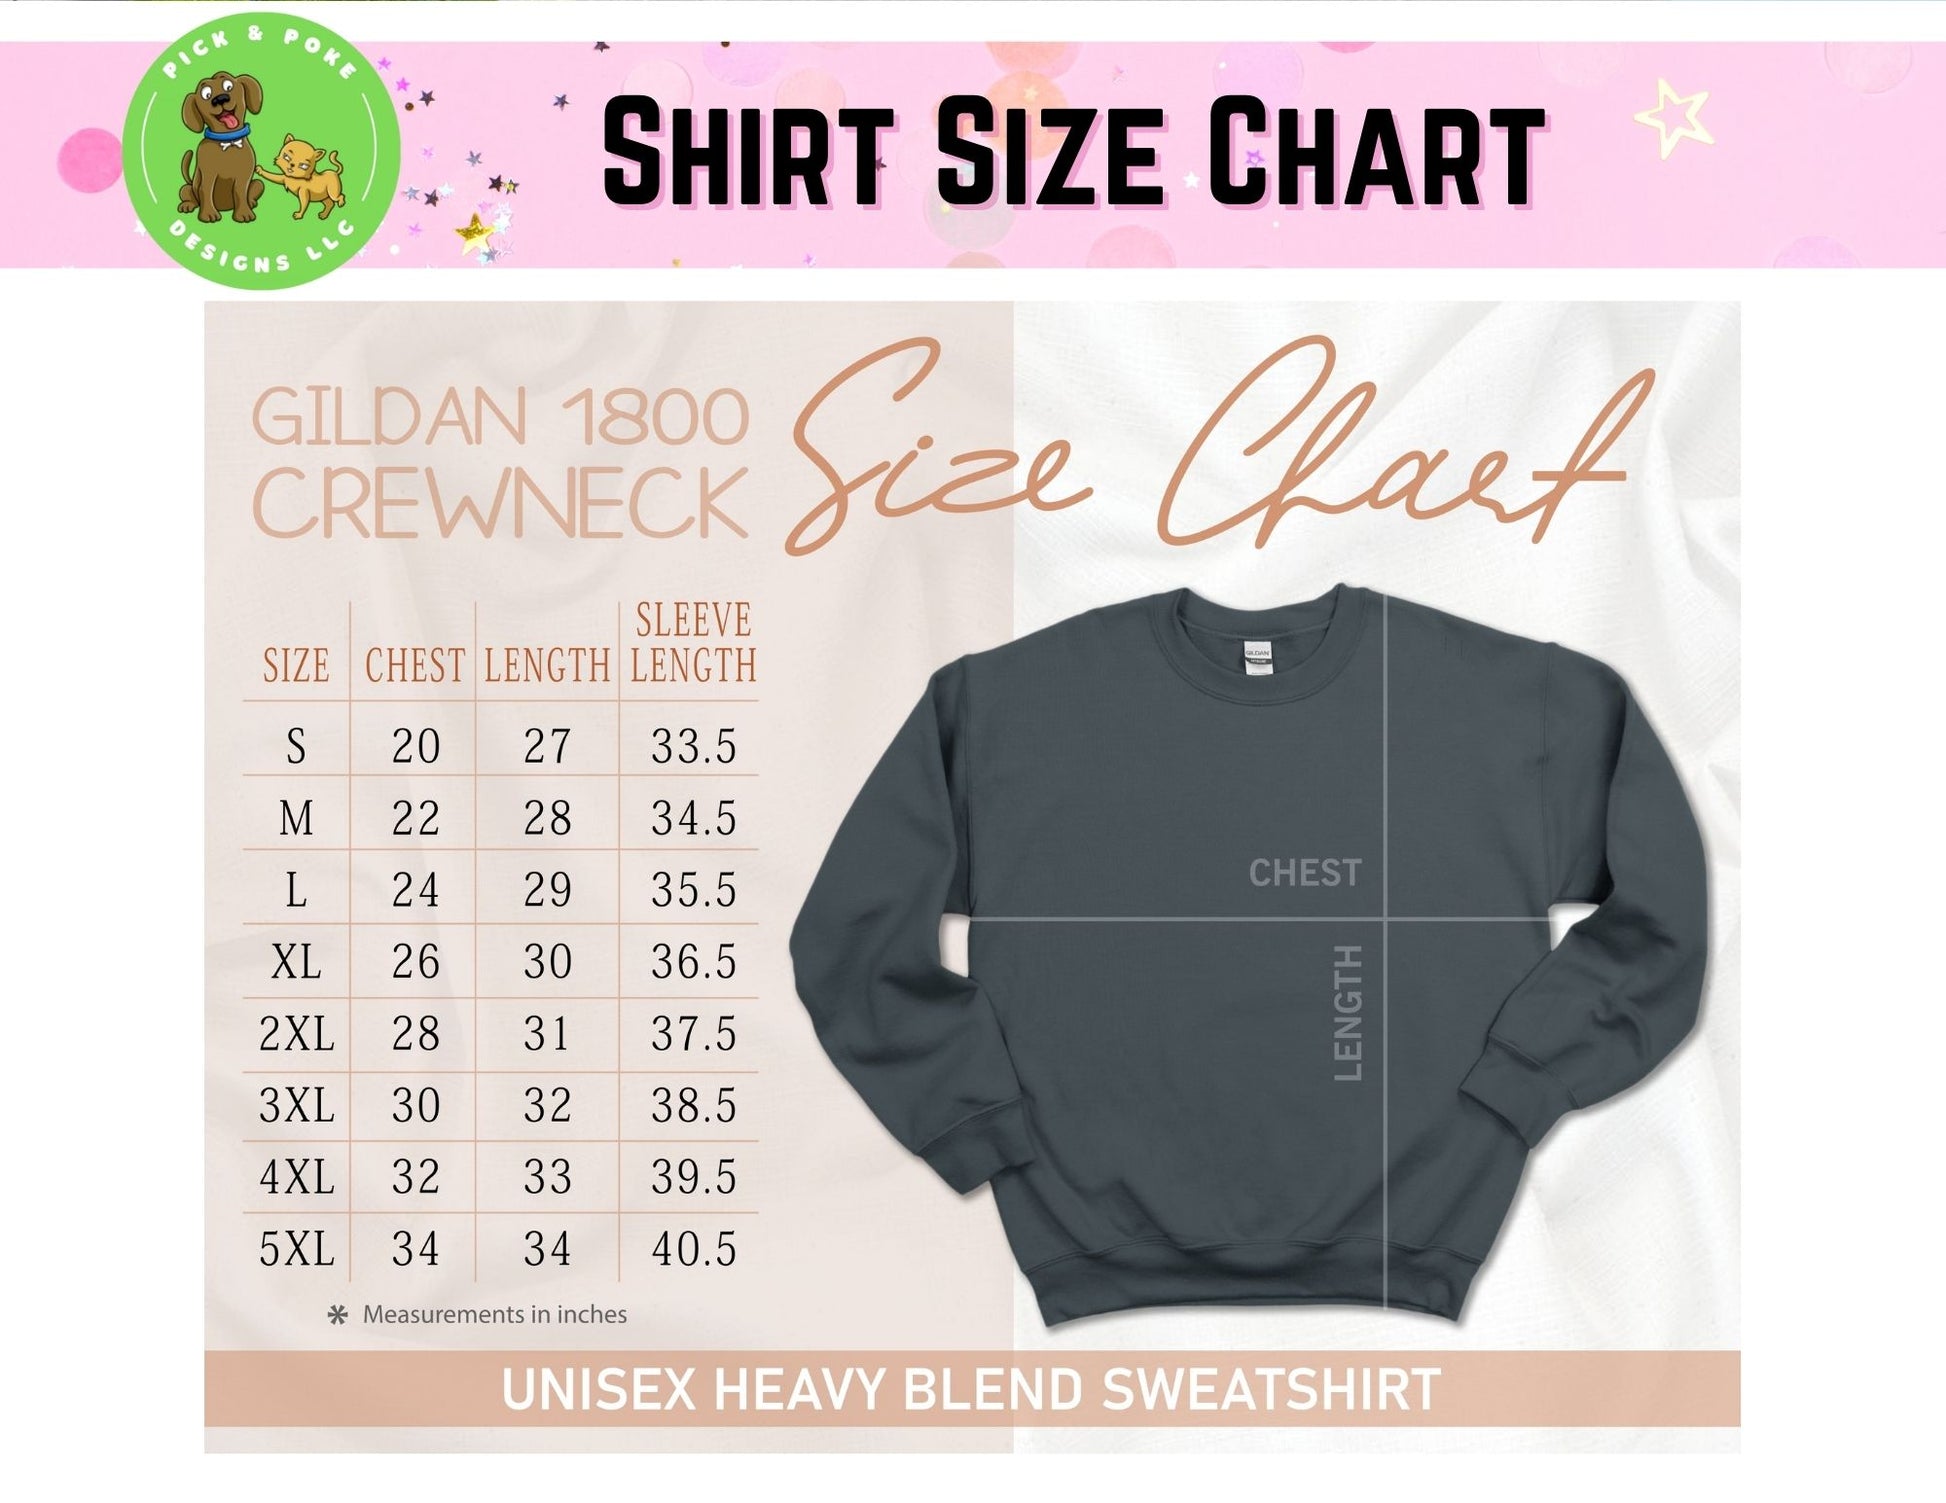 Size chart for Gildan brand 18000 crewneck sweatshirts